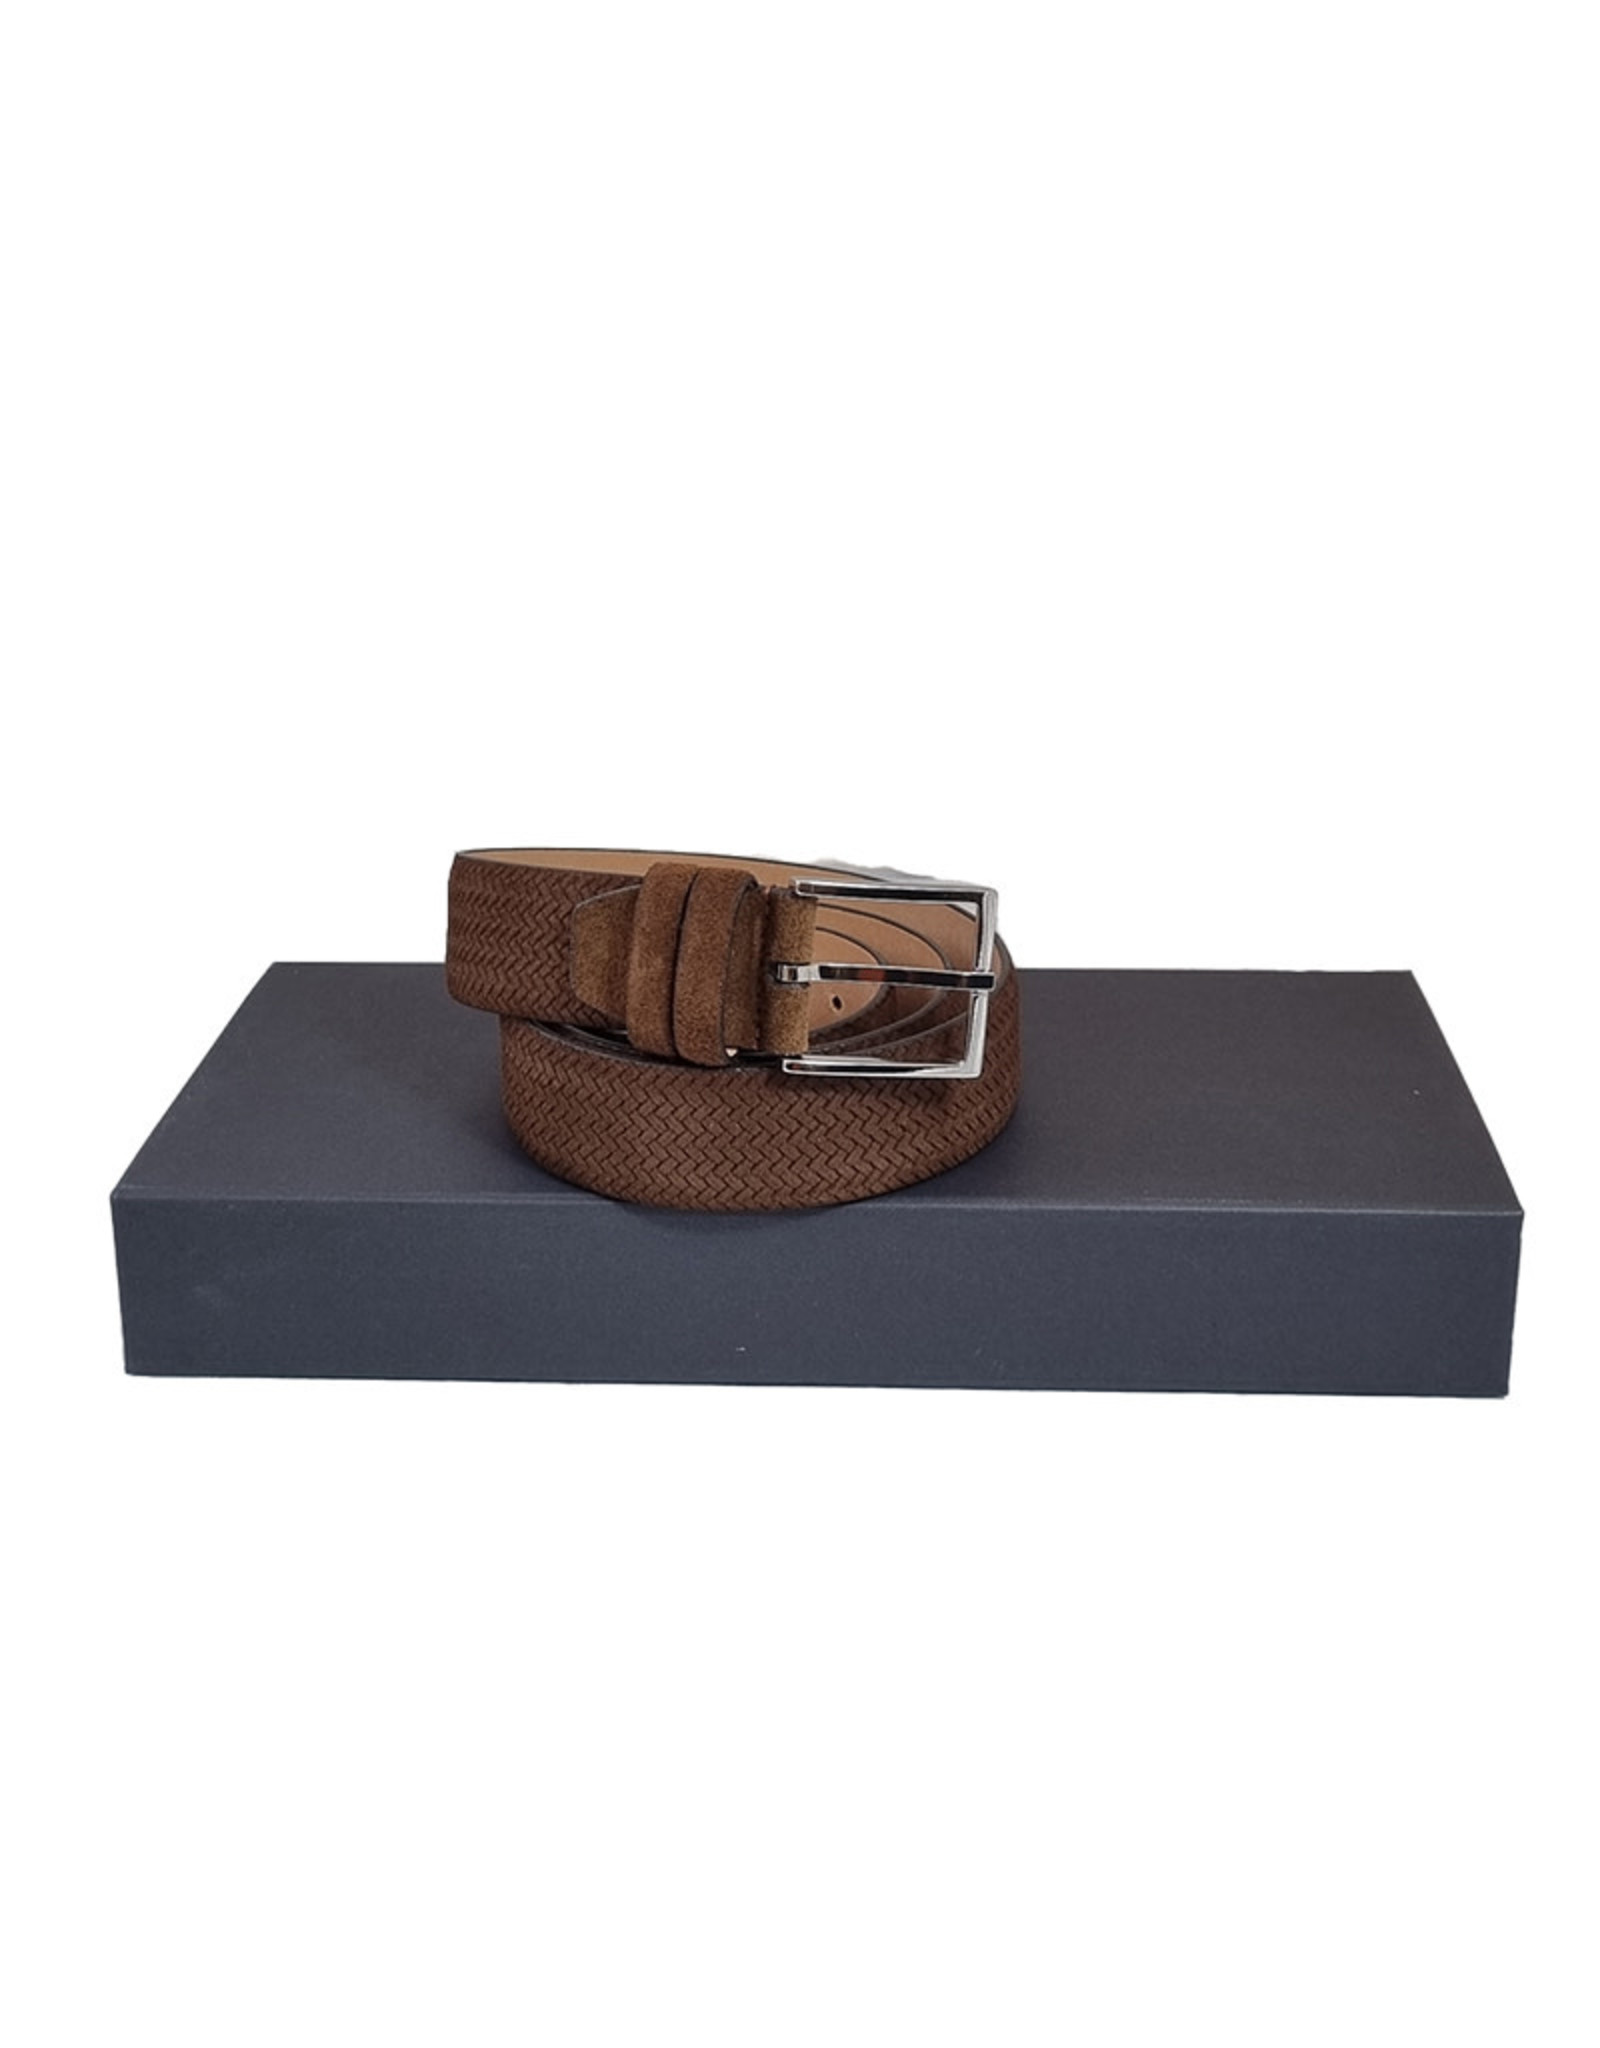 Belts+ Belts+ belt buckskin cognac Spaccato-Oliver